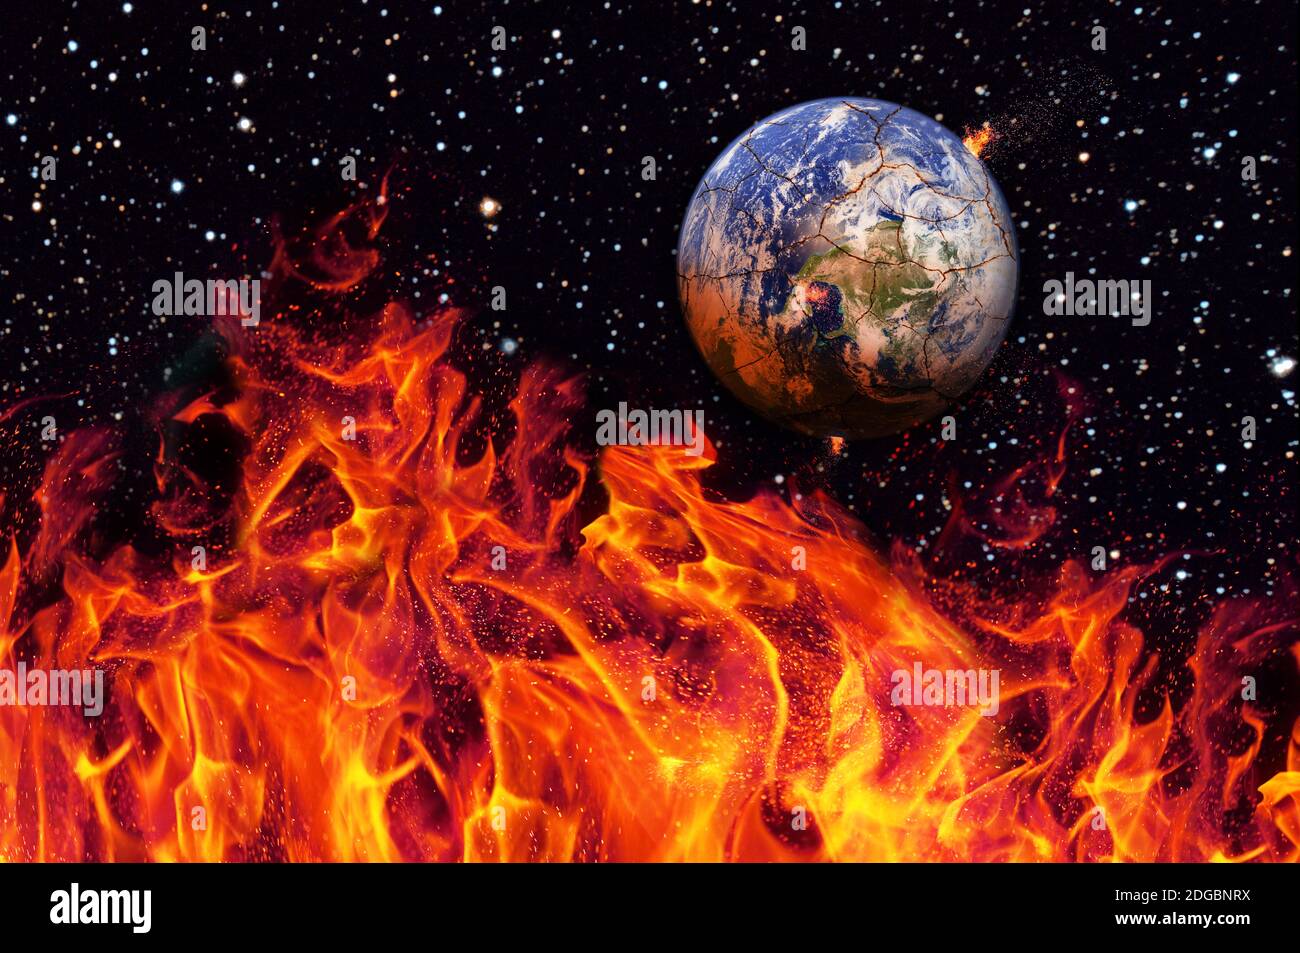 Planeta tierra destruido fotografías e imágenes de alta resolución - Alamy